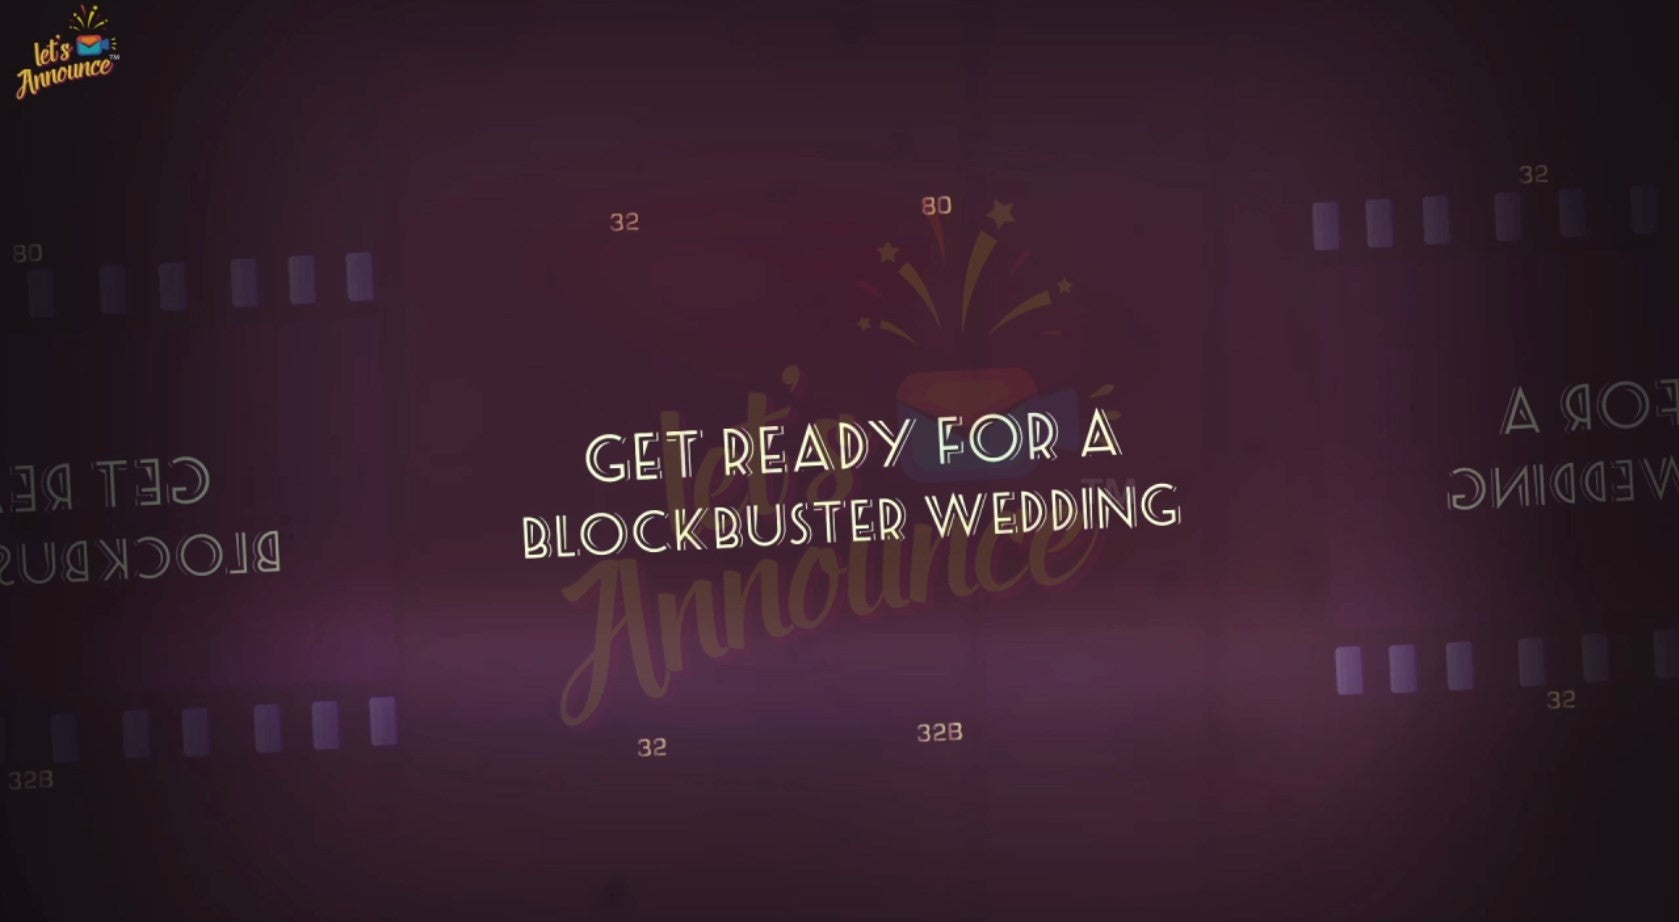 Blockbuster Wedding Invite - 30 sec (USD 35$)